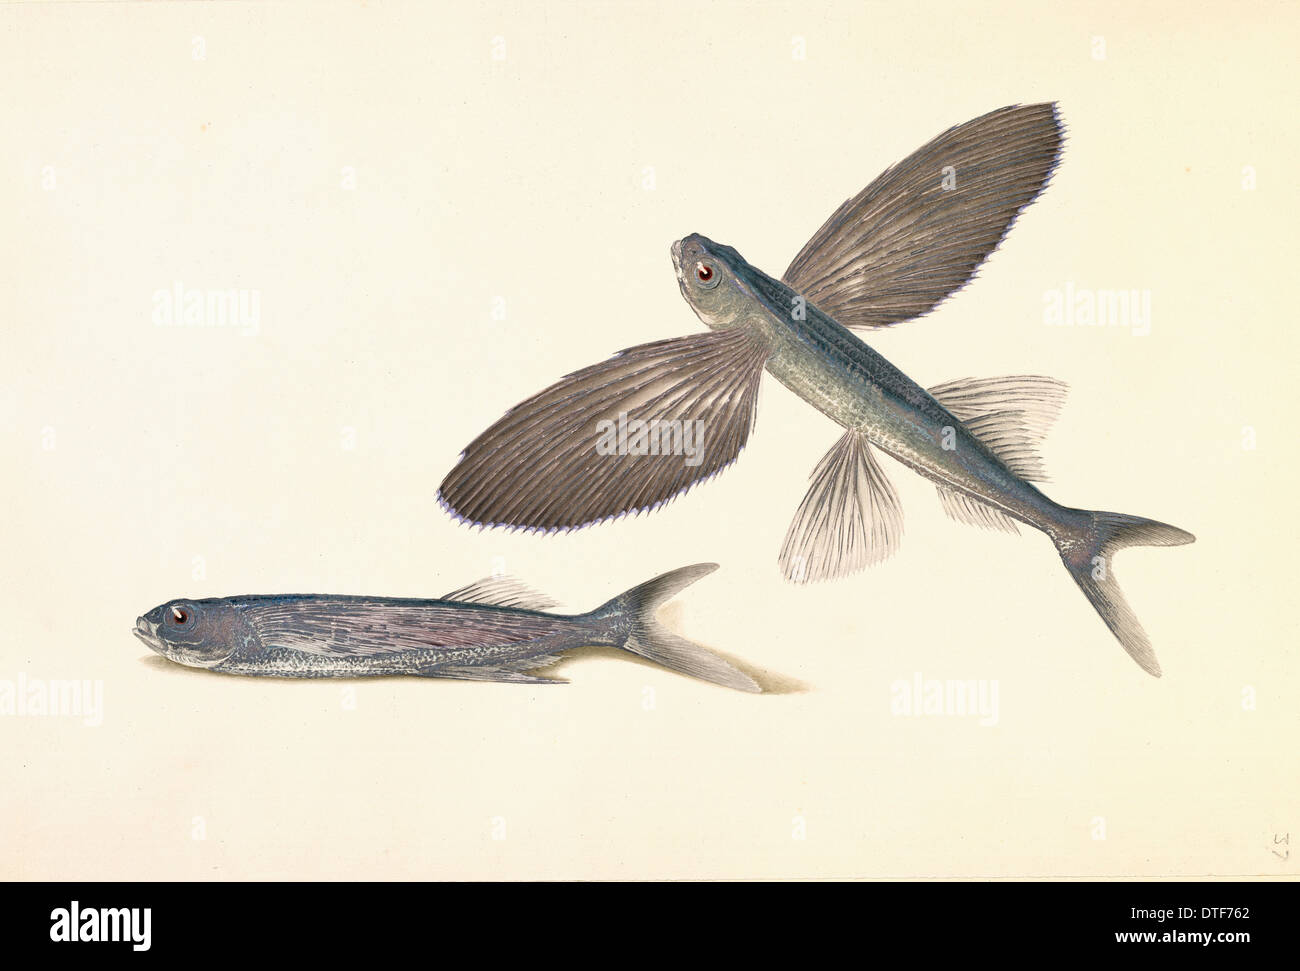 Cheilopogon sp., flyingfish Foto Stock